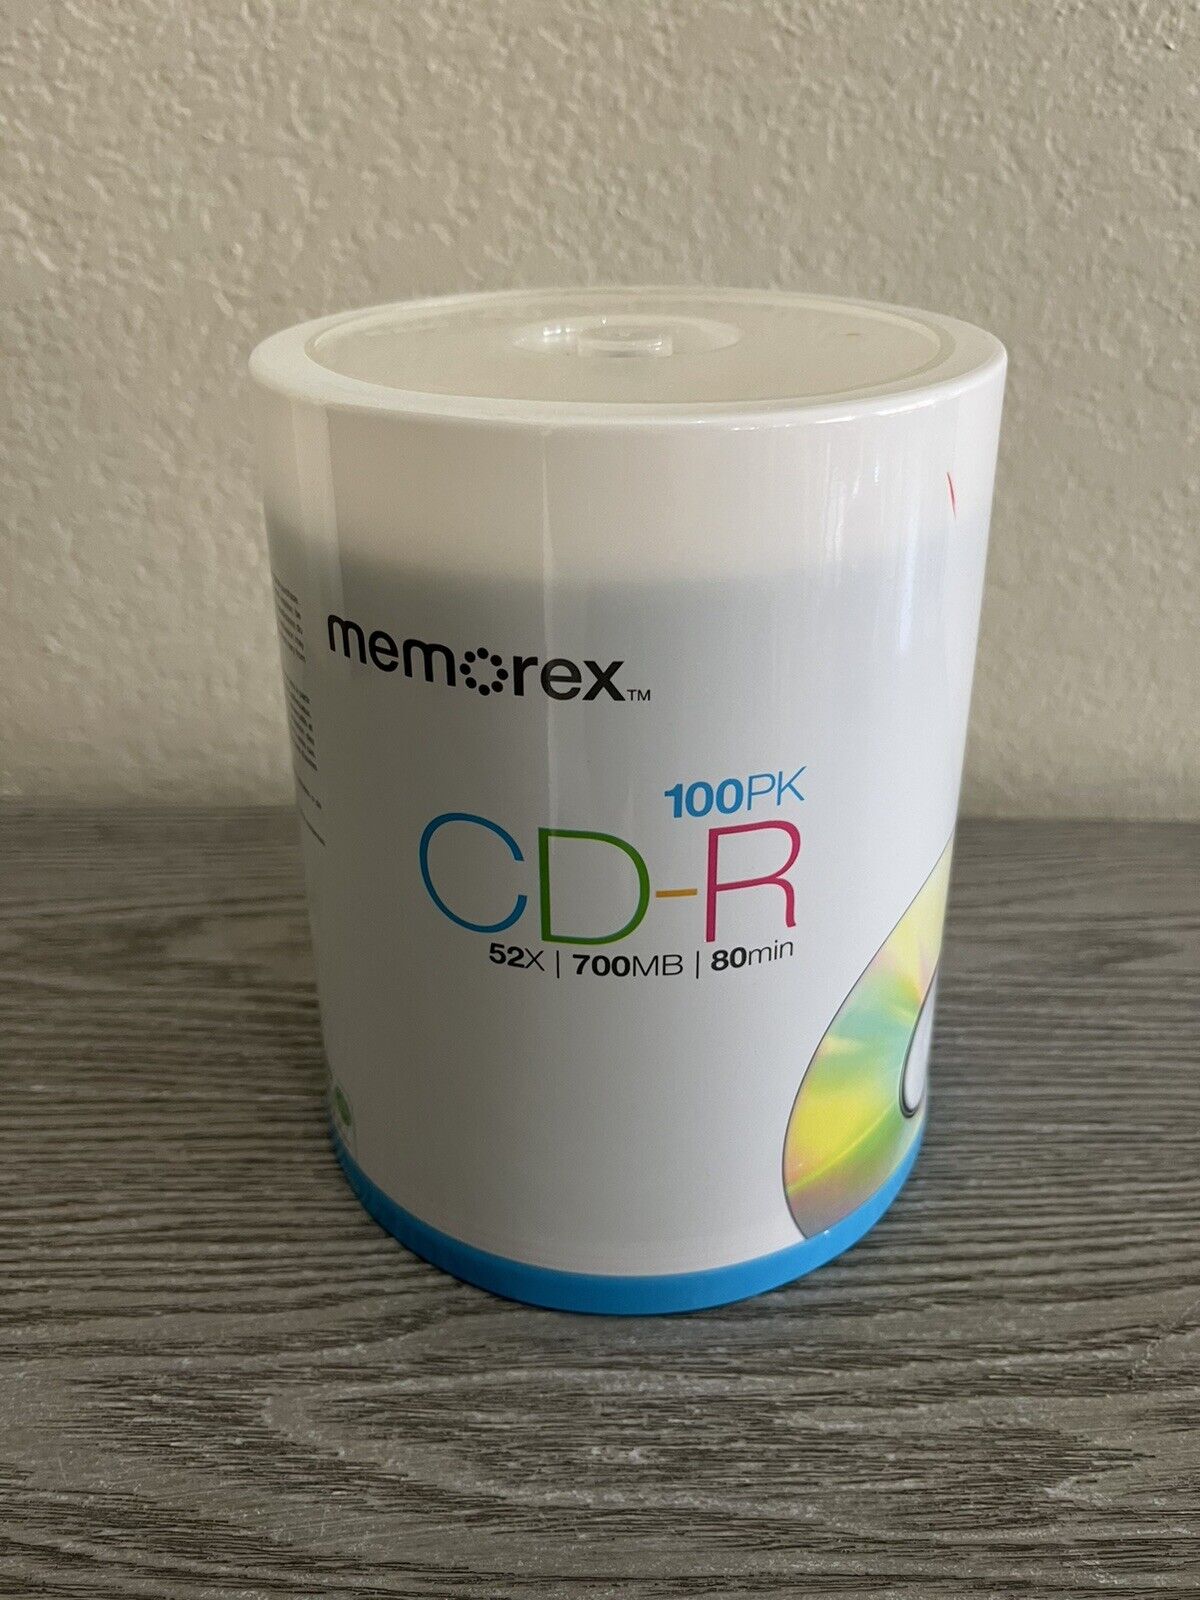 Memorex CD-R Digital Media-52X 700mb 80Min - 100 Pack, Factory Sealed